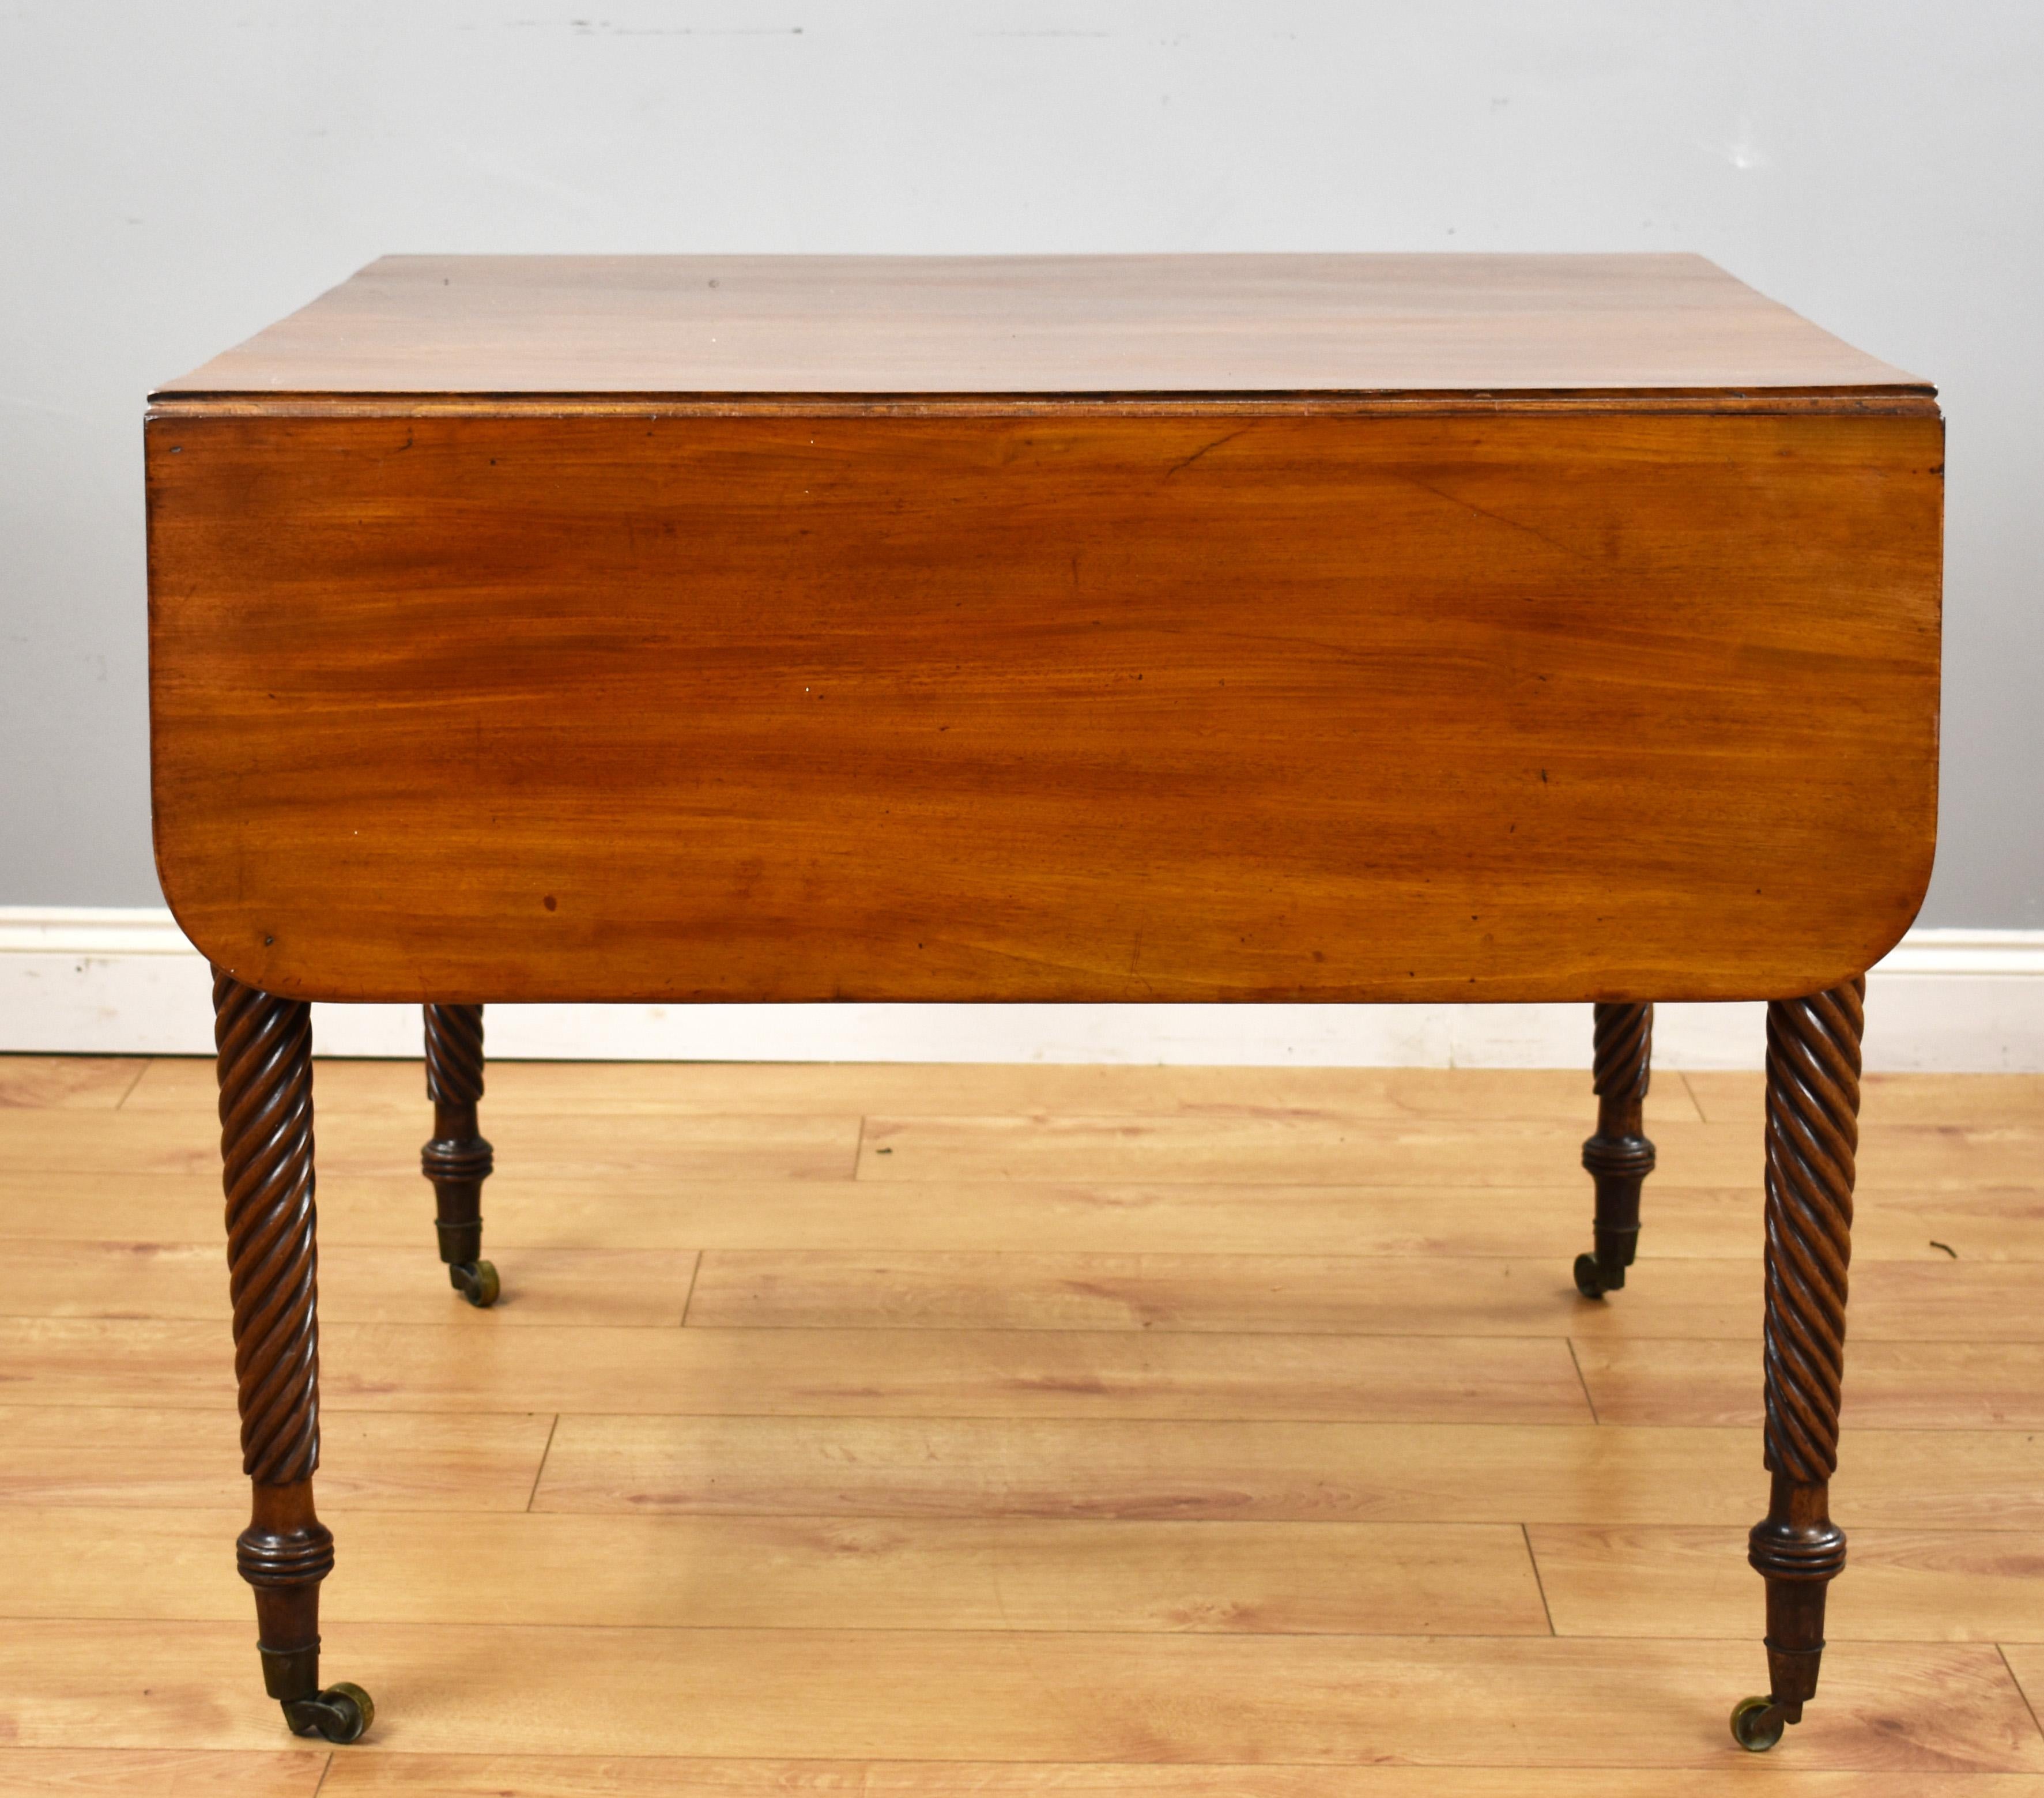 19th Century English Regency Mahogany Drop-Leaf Table For Sale 6